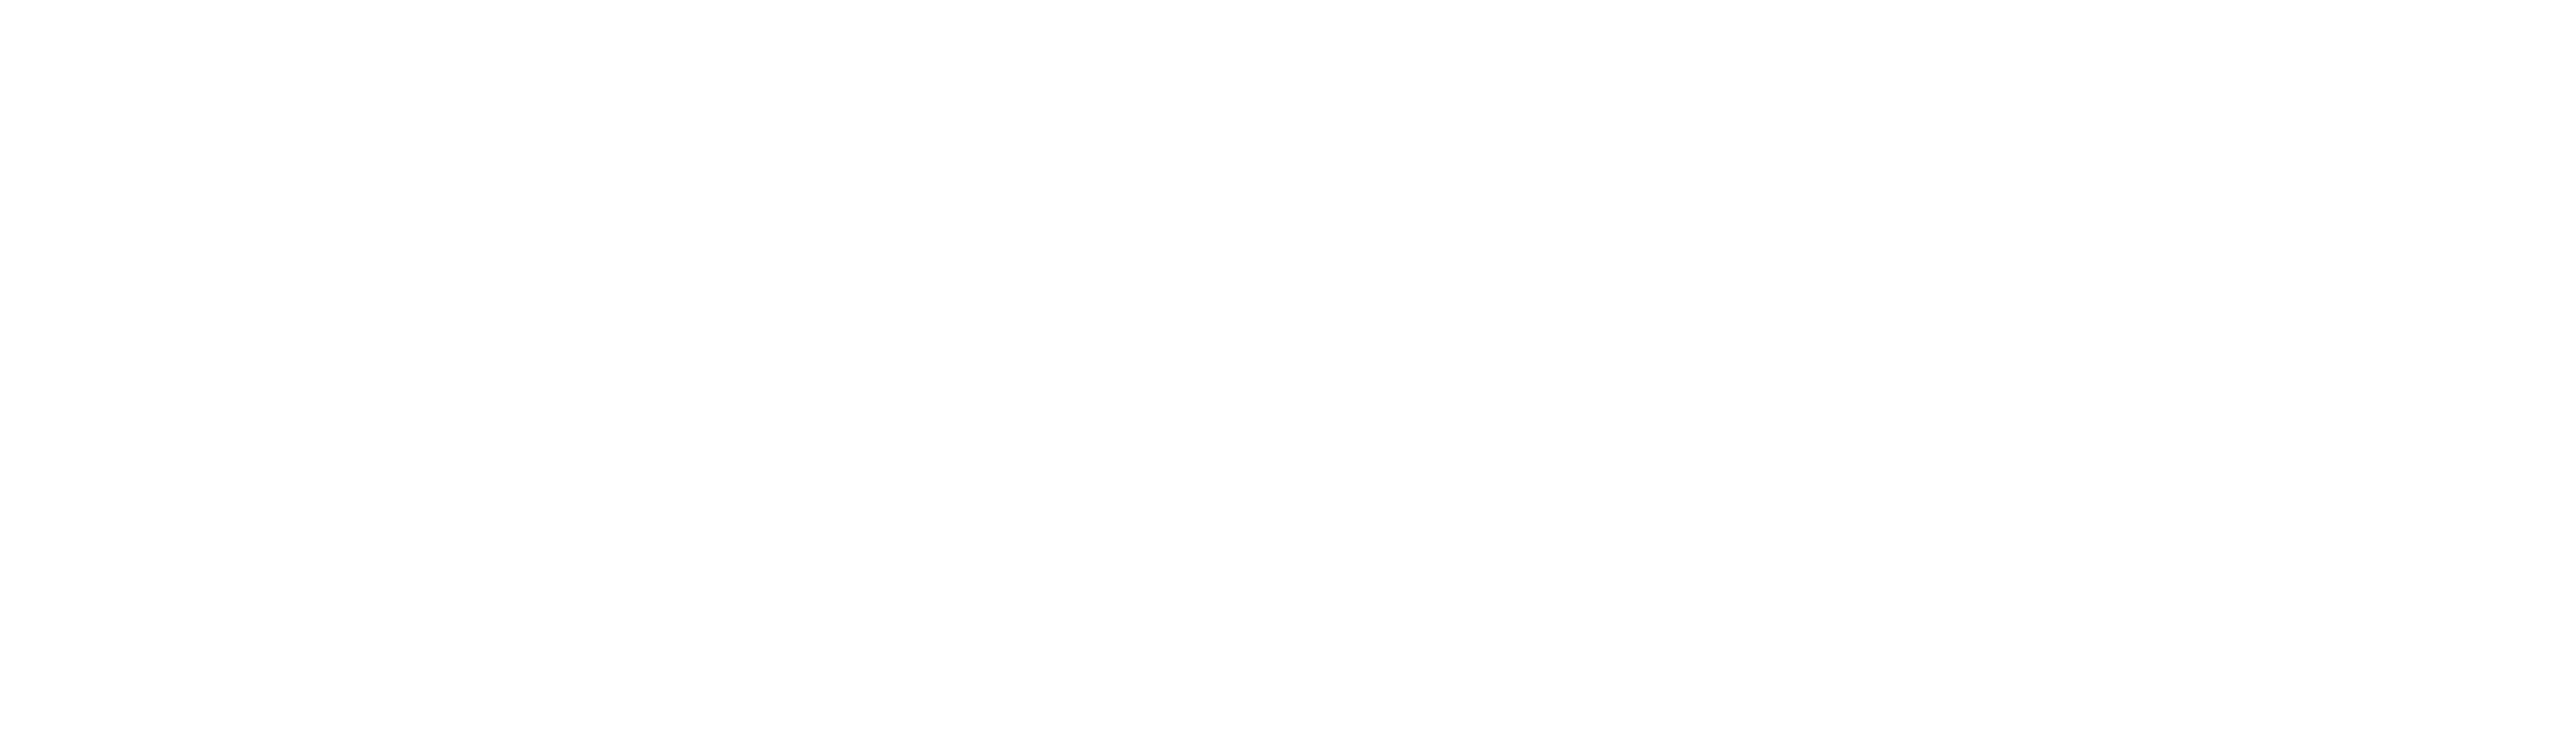 tinittusk kids plantbased gut health